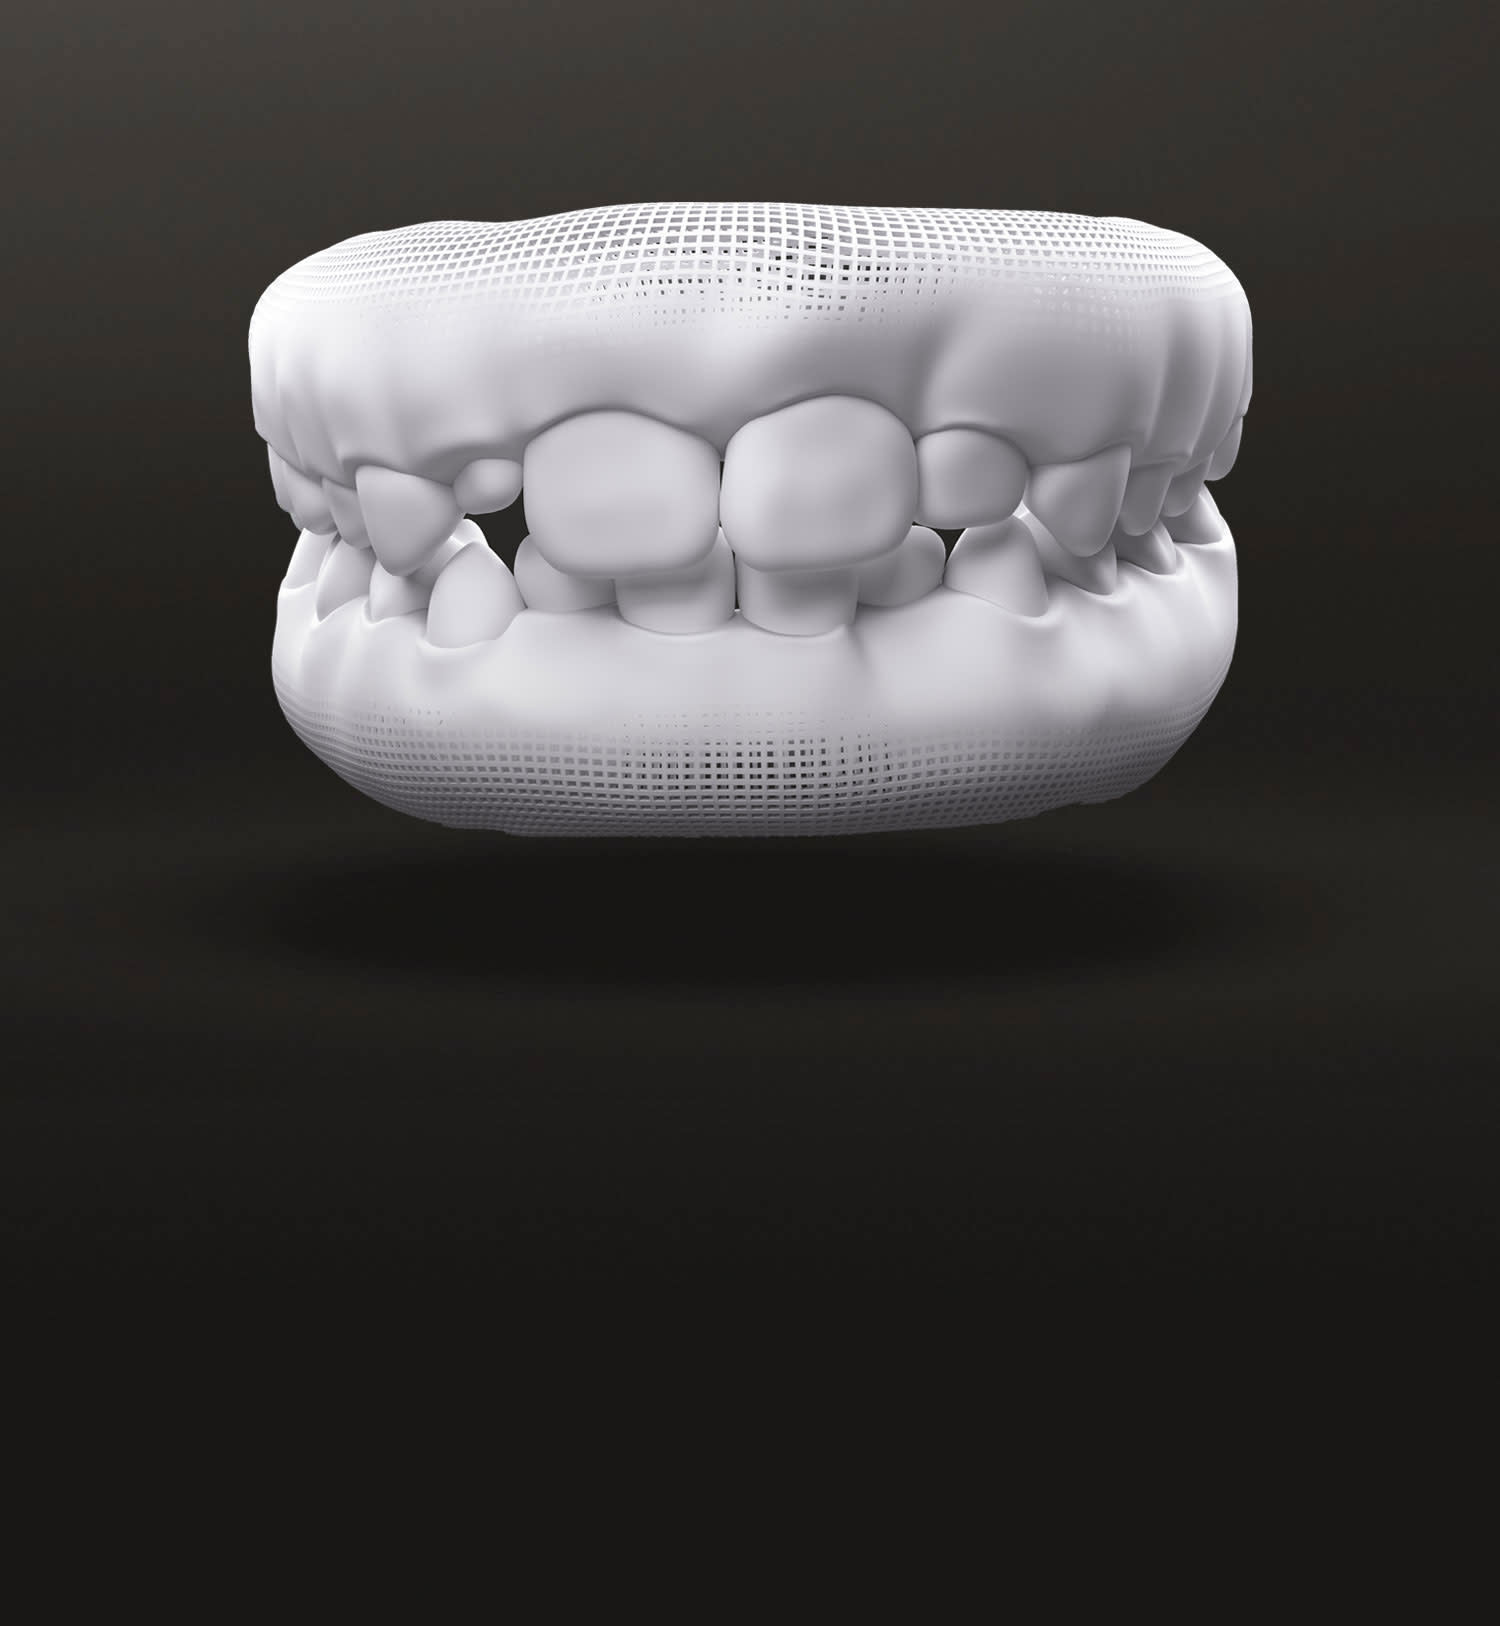 Baby and permanent teeth model -  Treatable cases - Invisalign UK